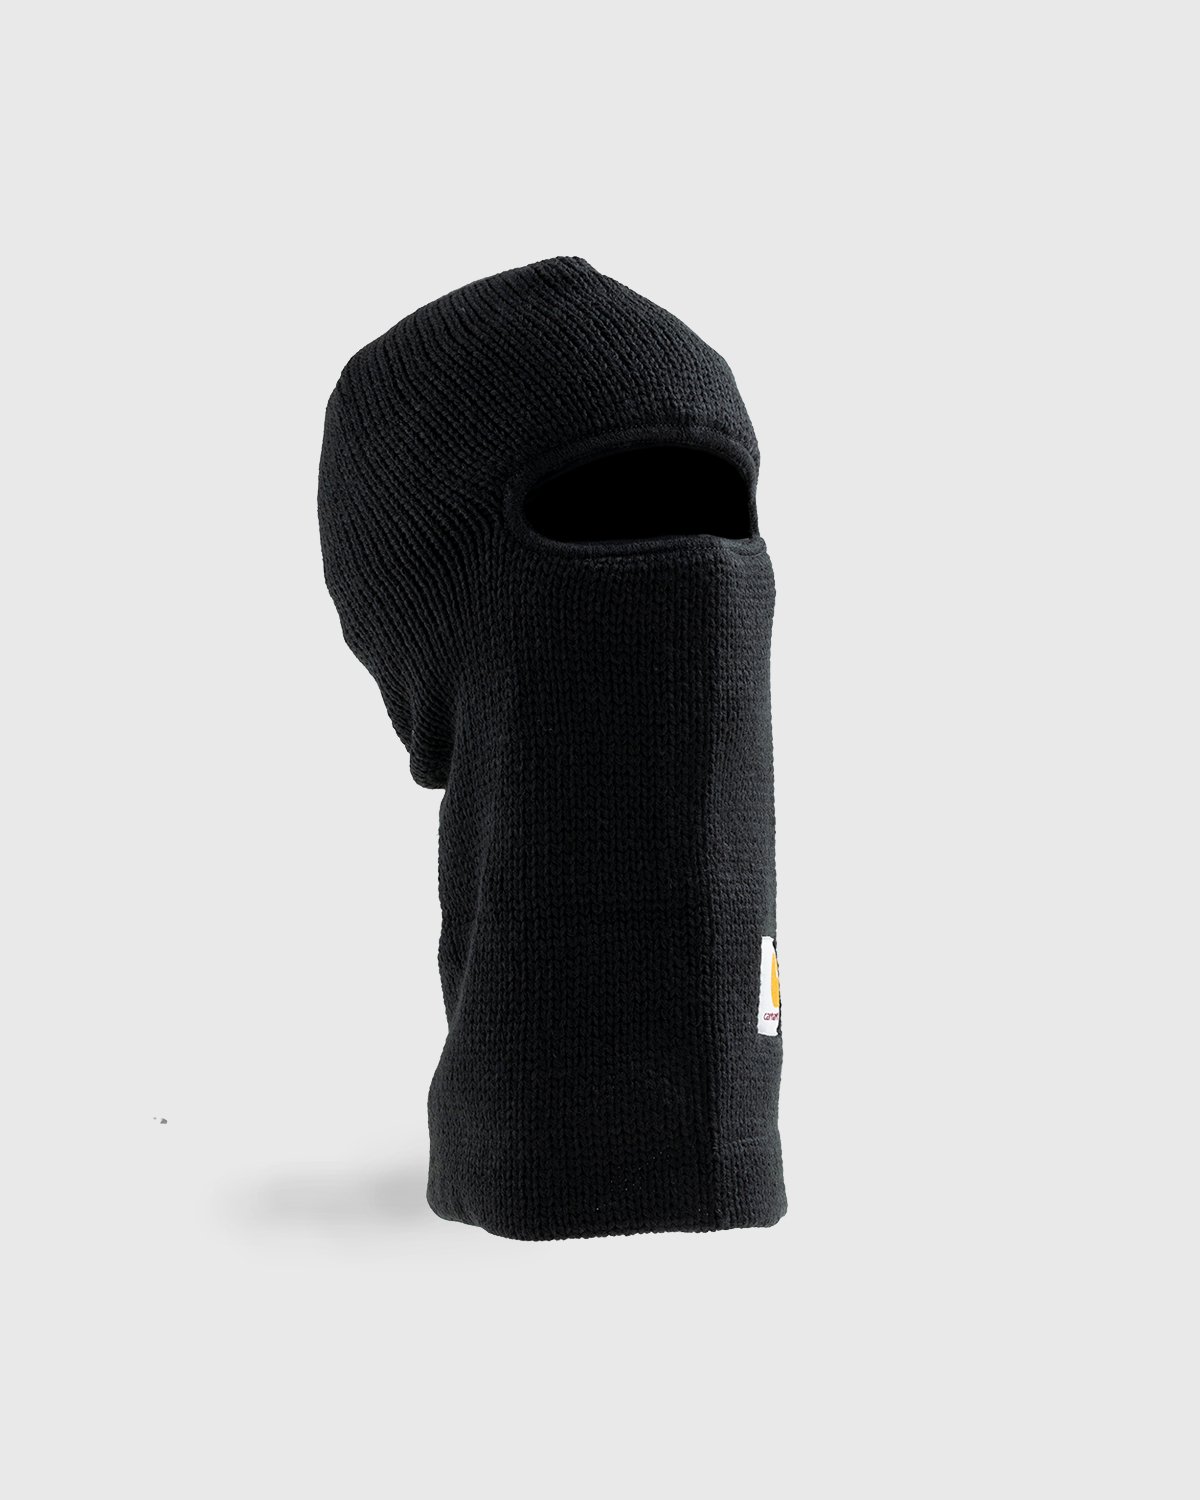 Carhartt WIP - Storm Mask Black - Accessories - Black - Image 2